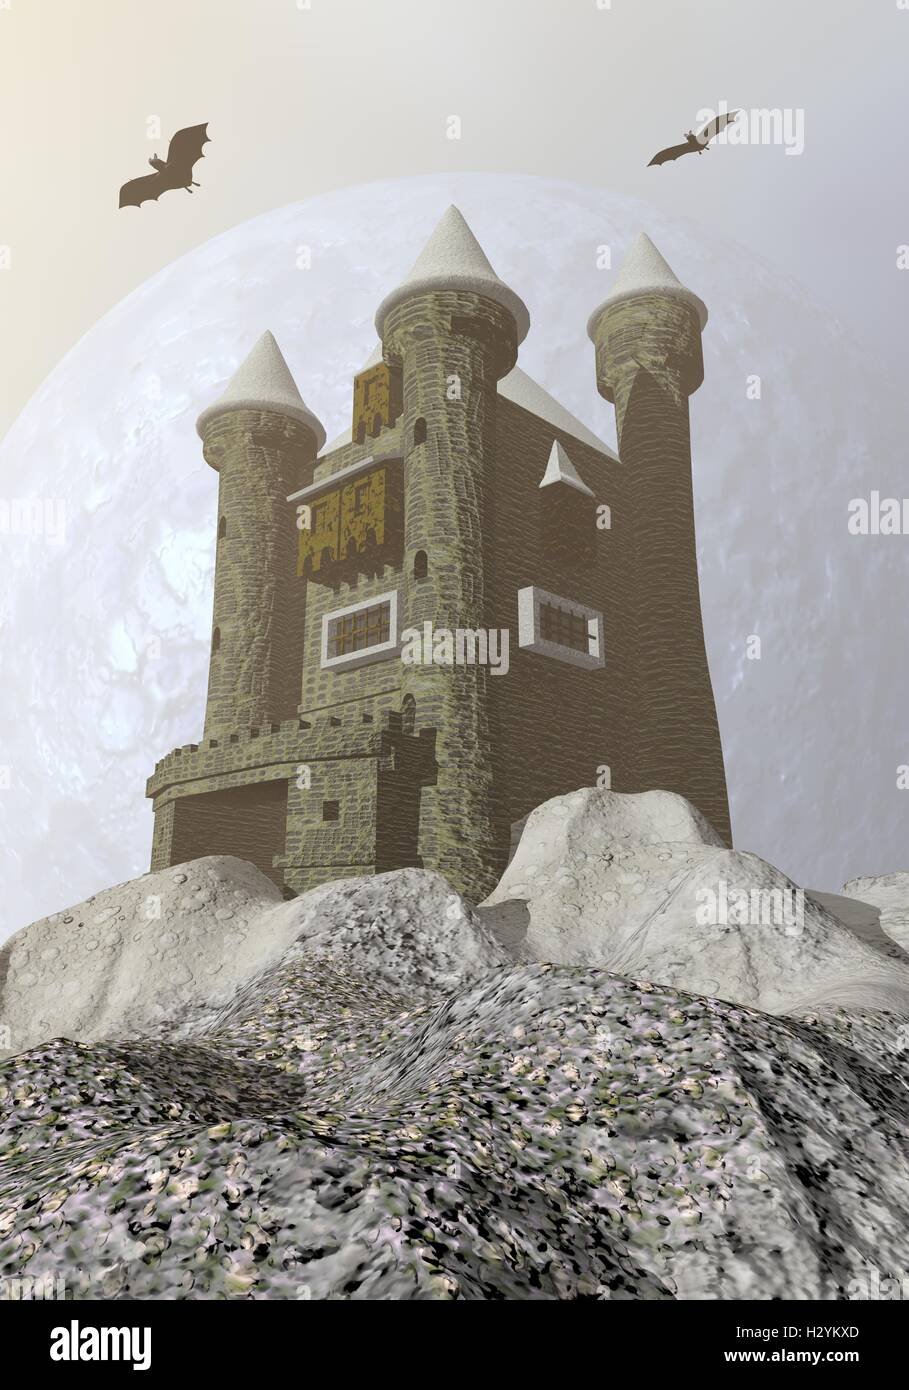 Fantasy castle -Fotos und -Bildmaterial in hoher Auflösung – Alamy